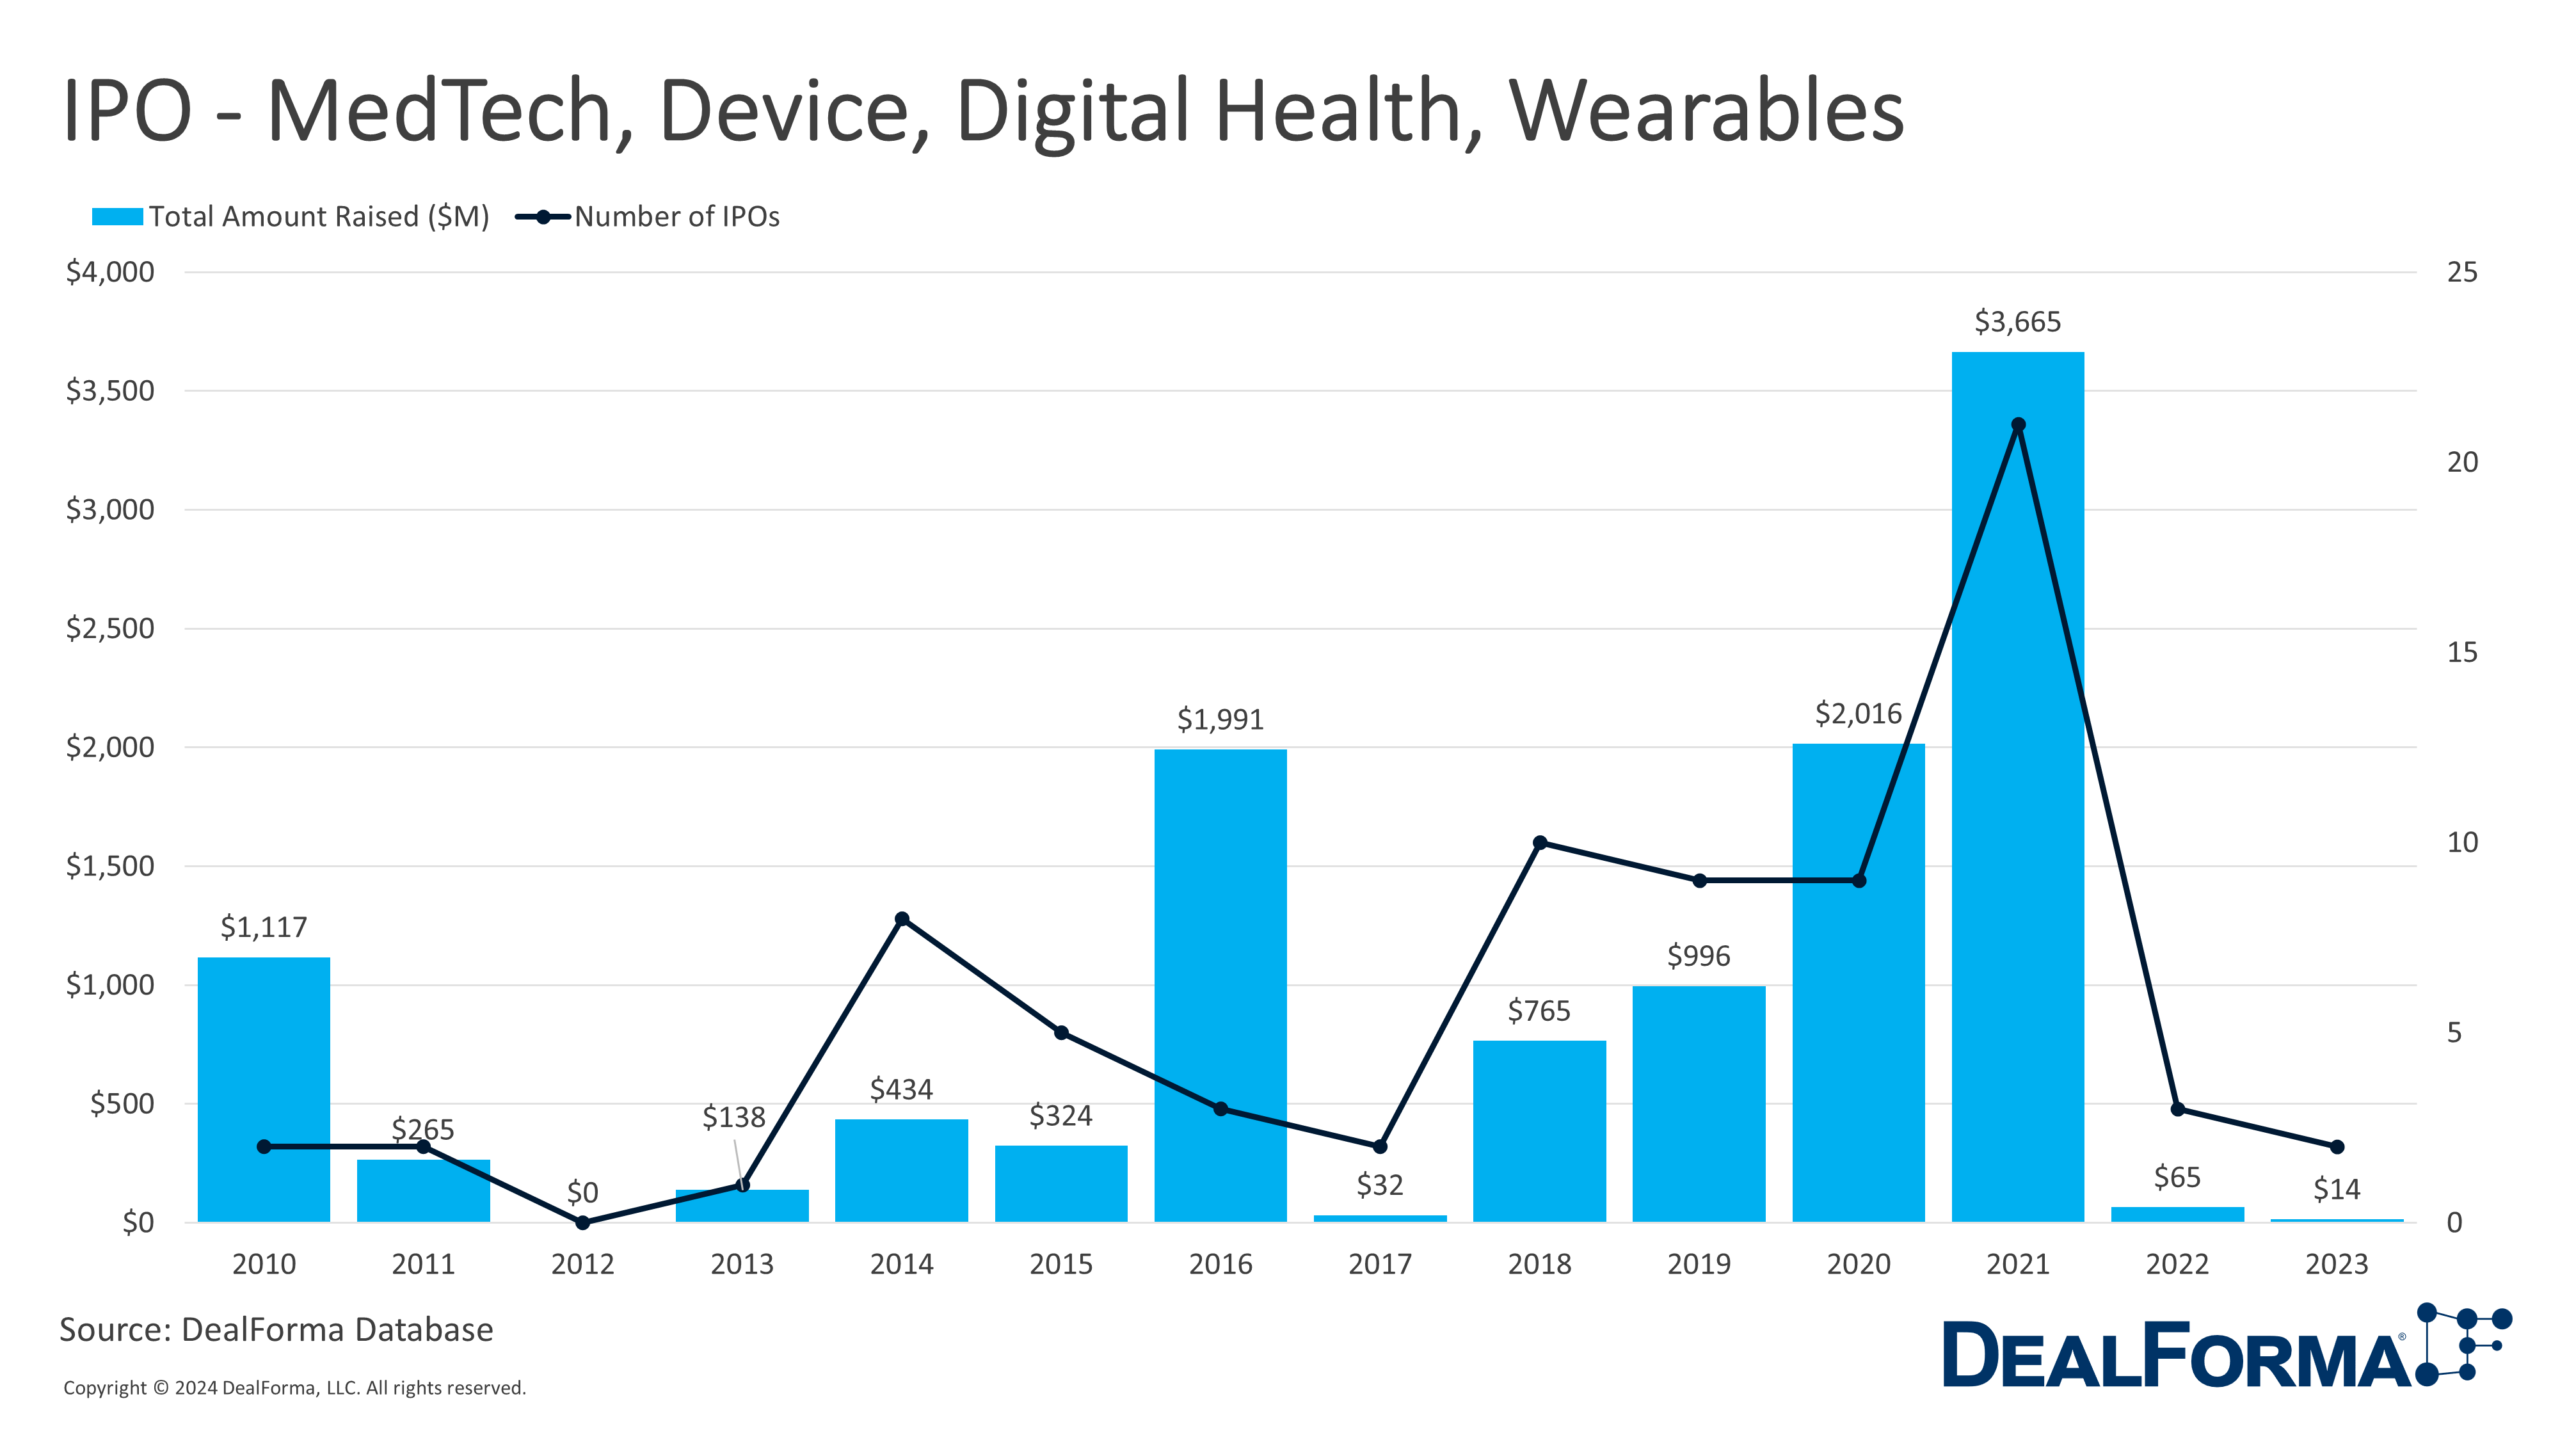 IPO - MedTech, Device, Digital Health, Wearables